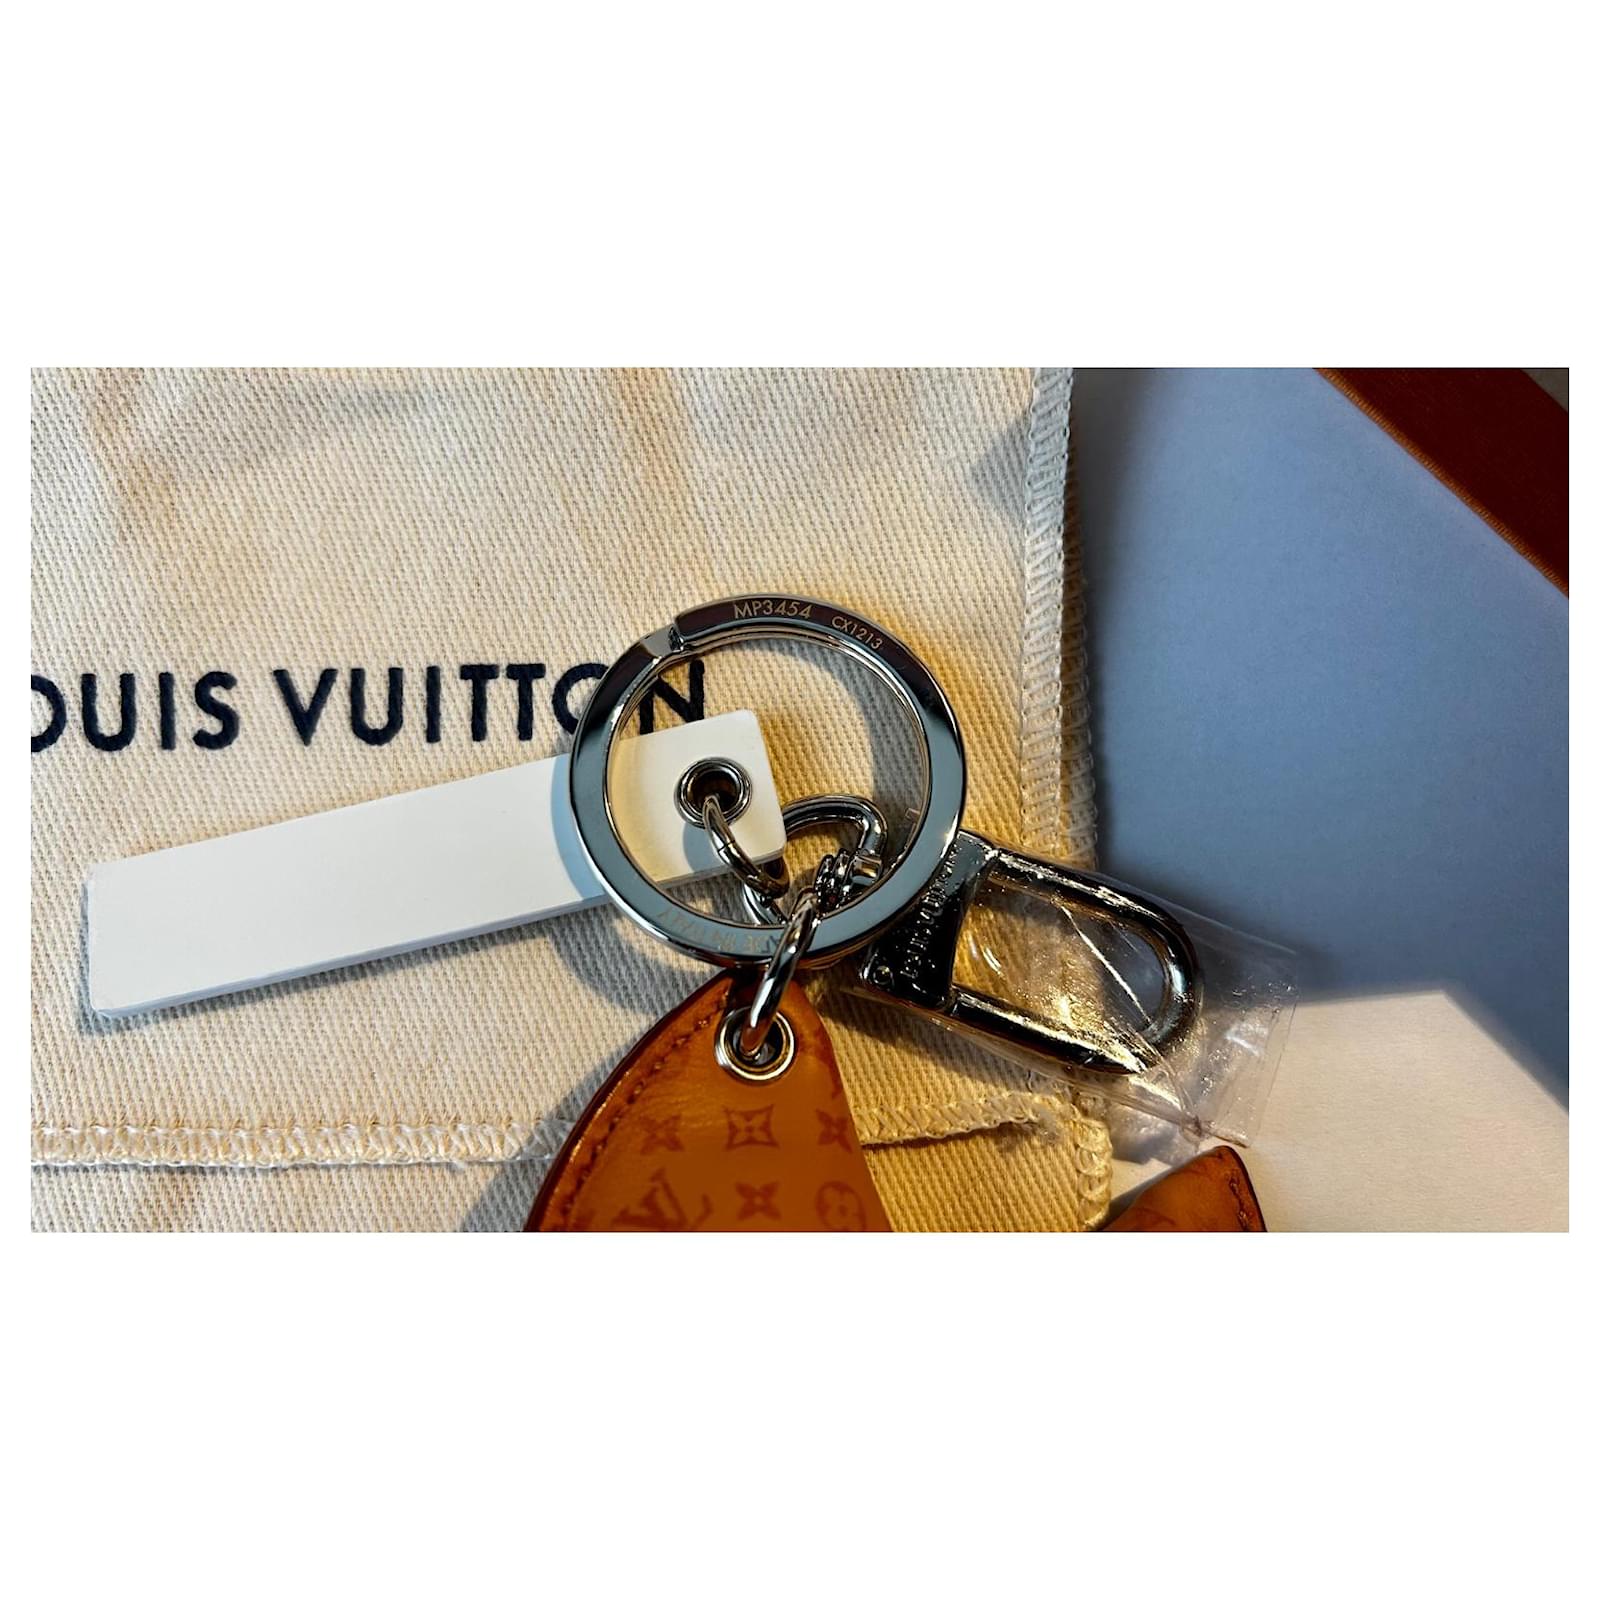 Louis Vuitton Fortune Cookie / Fortune Cookie Pendant